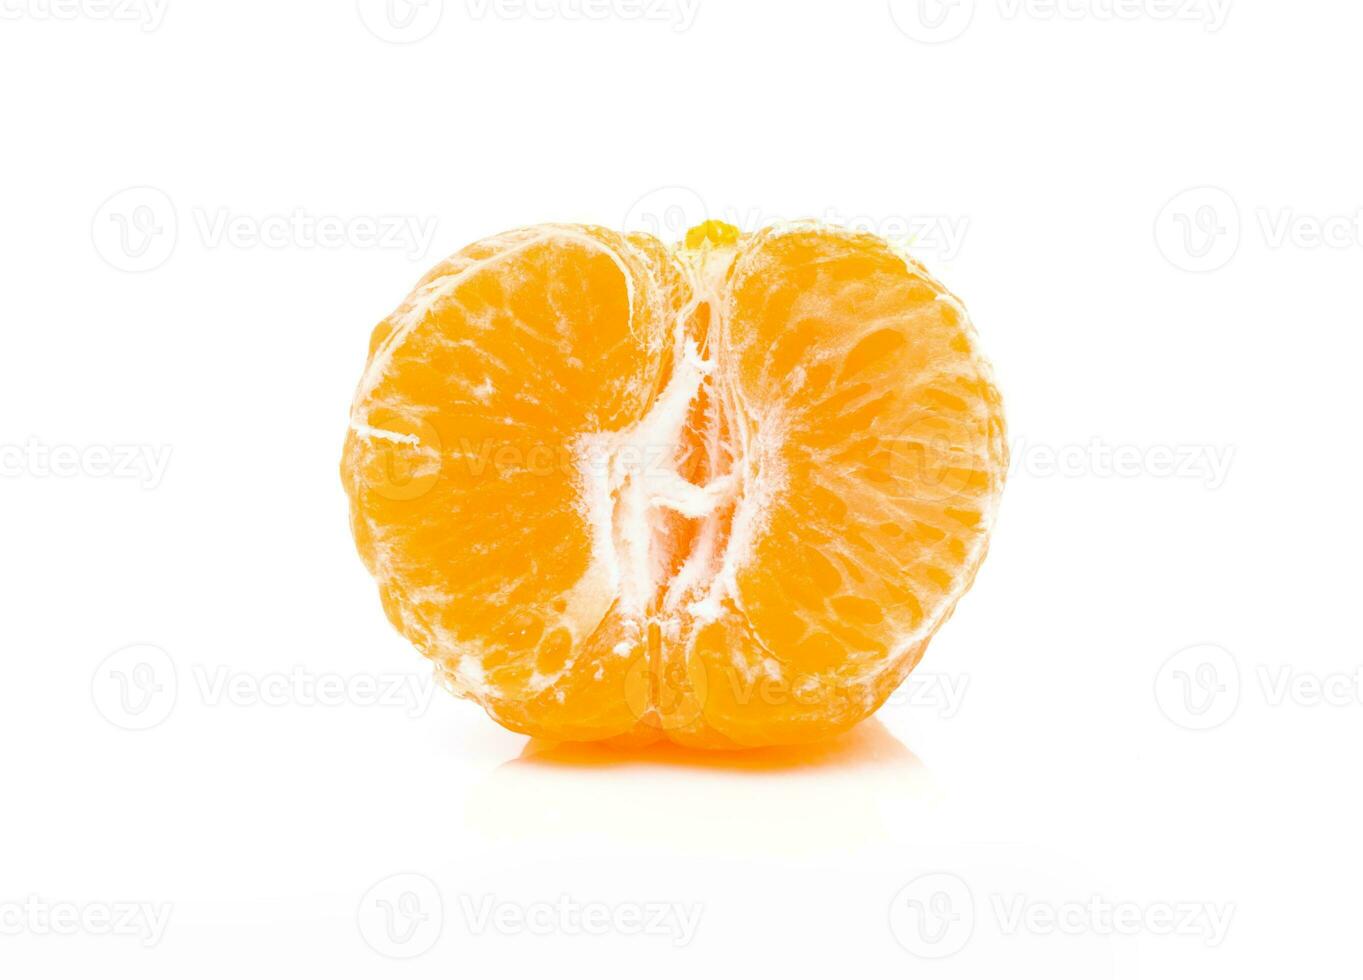 shogun apelsiner frukt på en vit bakgrund foto